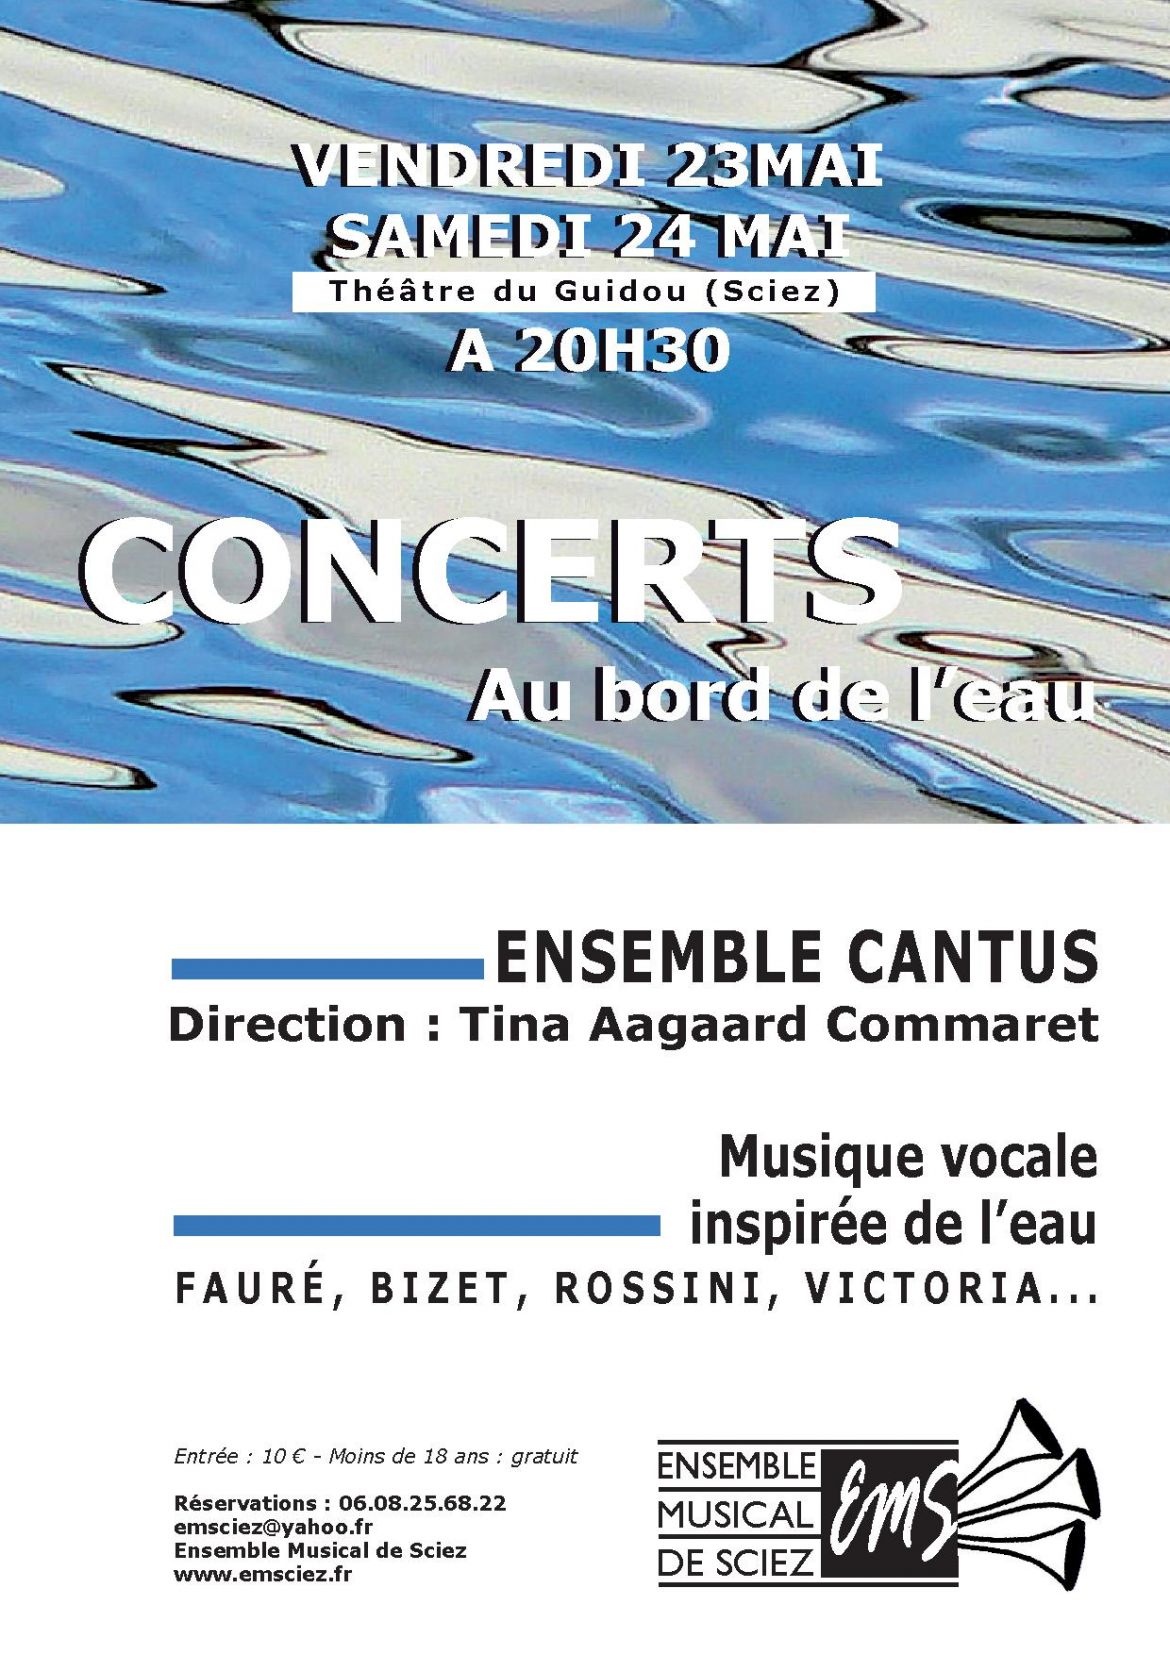 Concerts-Au-bord-de-leau-23-24-mai-2014.jpg